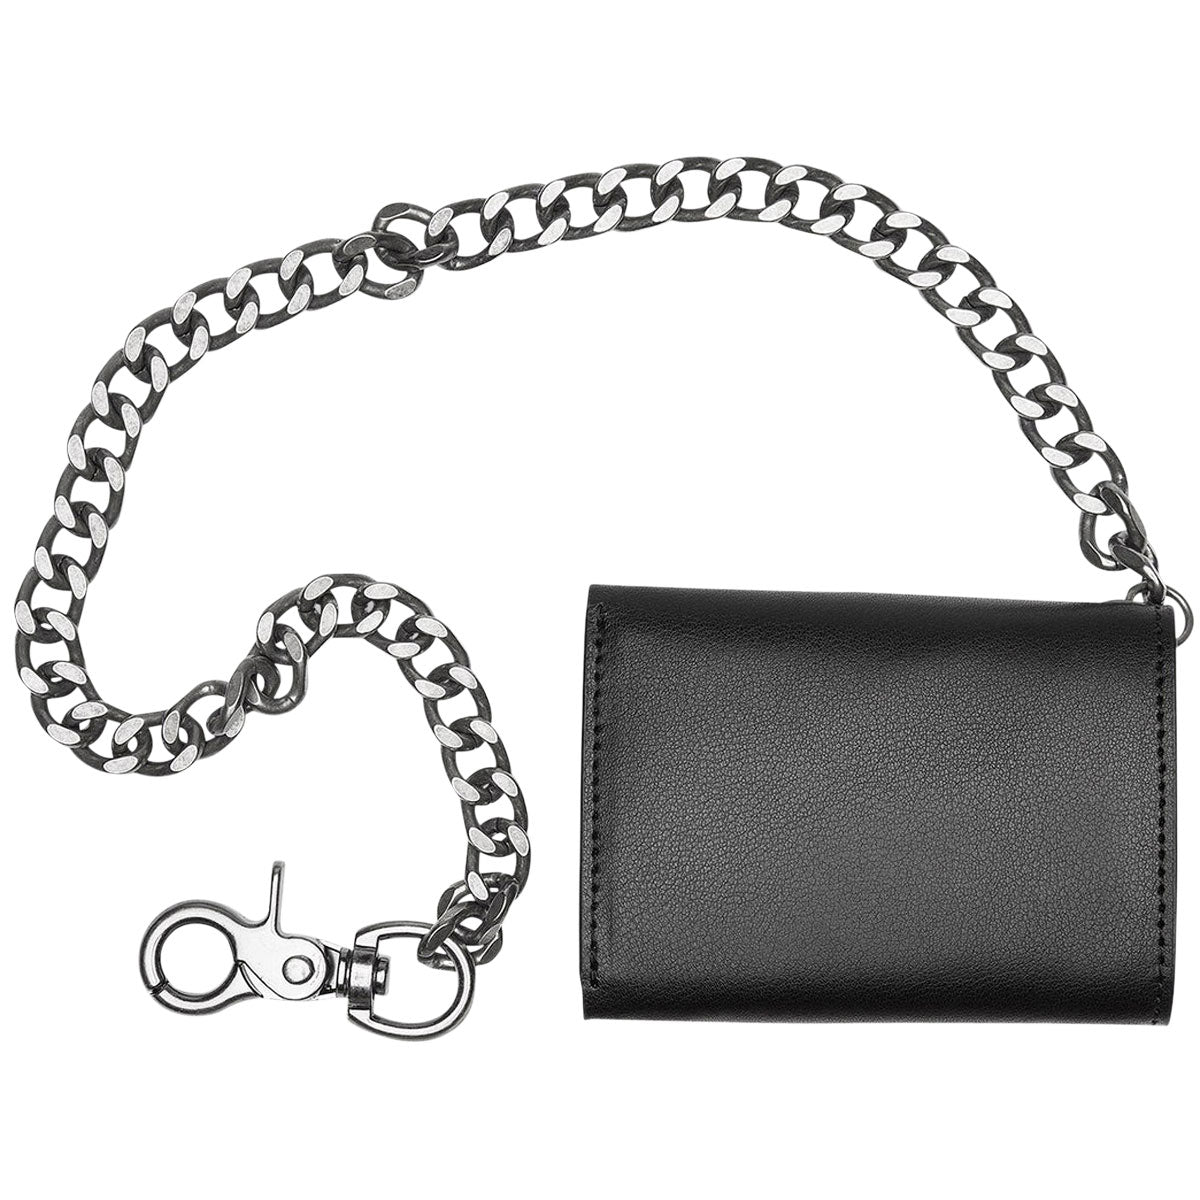 Volcom Pistol Leather Wallet - Black image 2